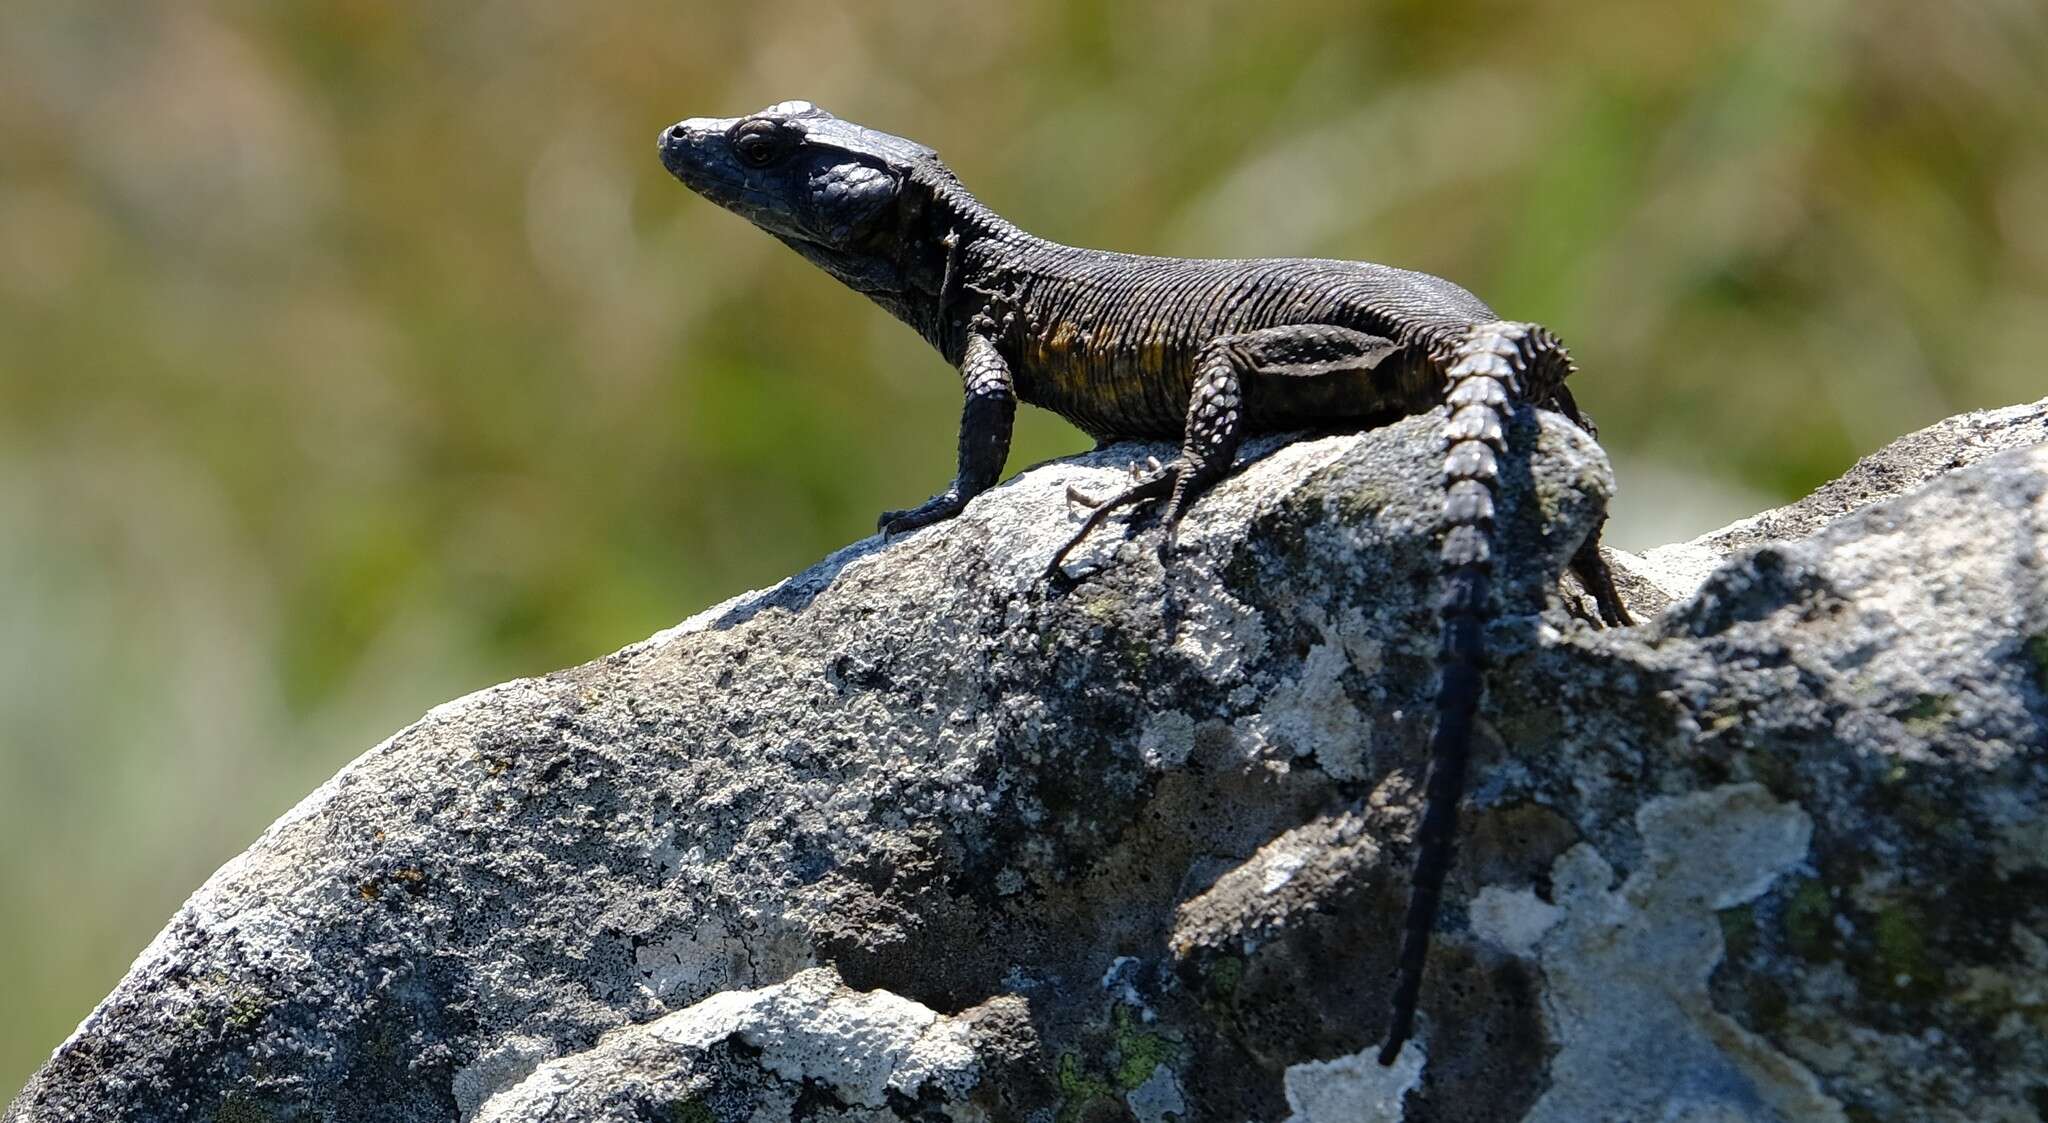 Image of Northern Crag Lizard